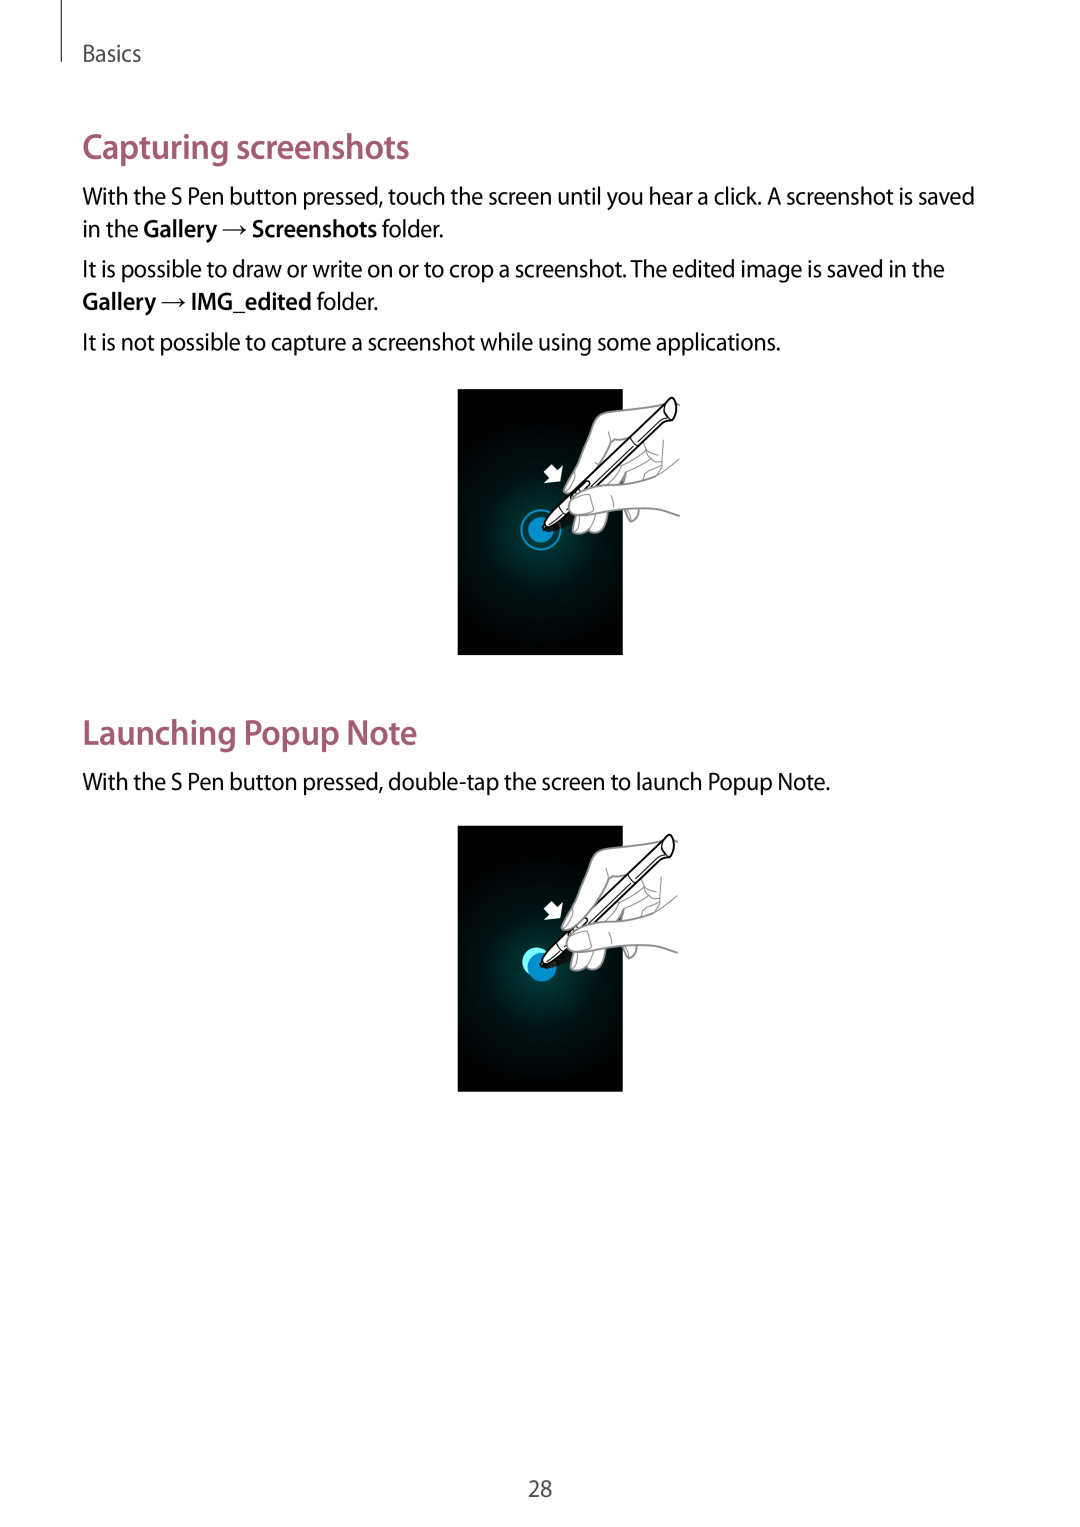 Samsung GT-N5100 user manual Capturing screenshots, Launching Popup Note, Basics 